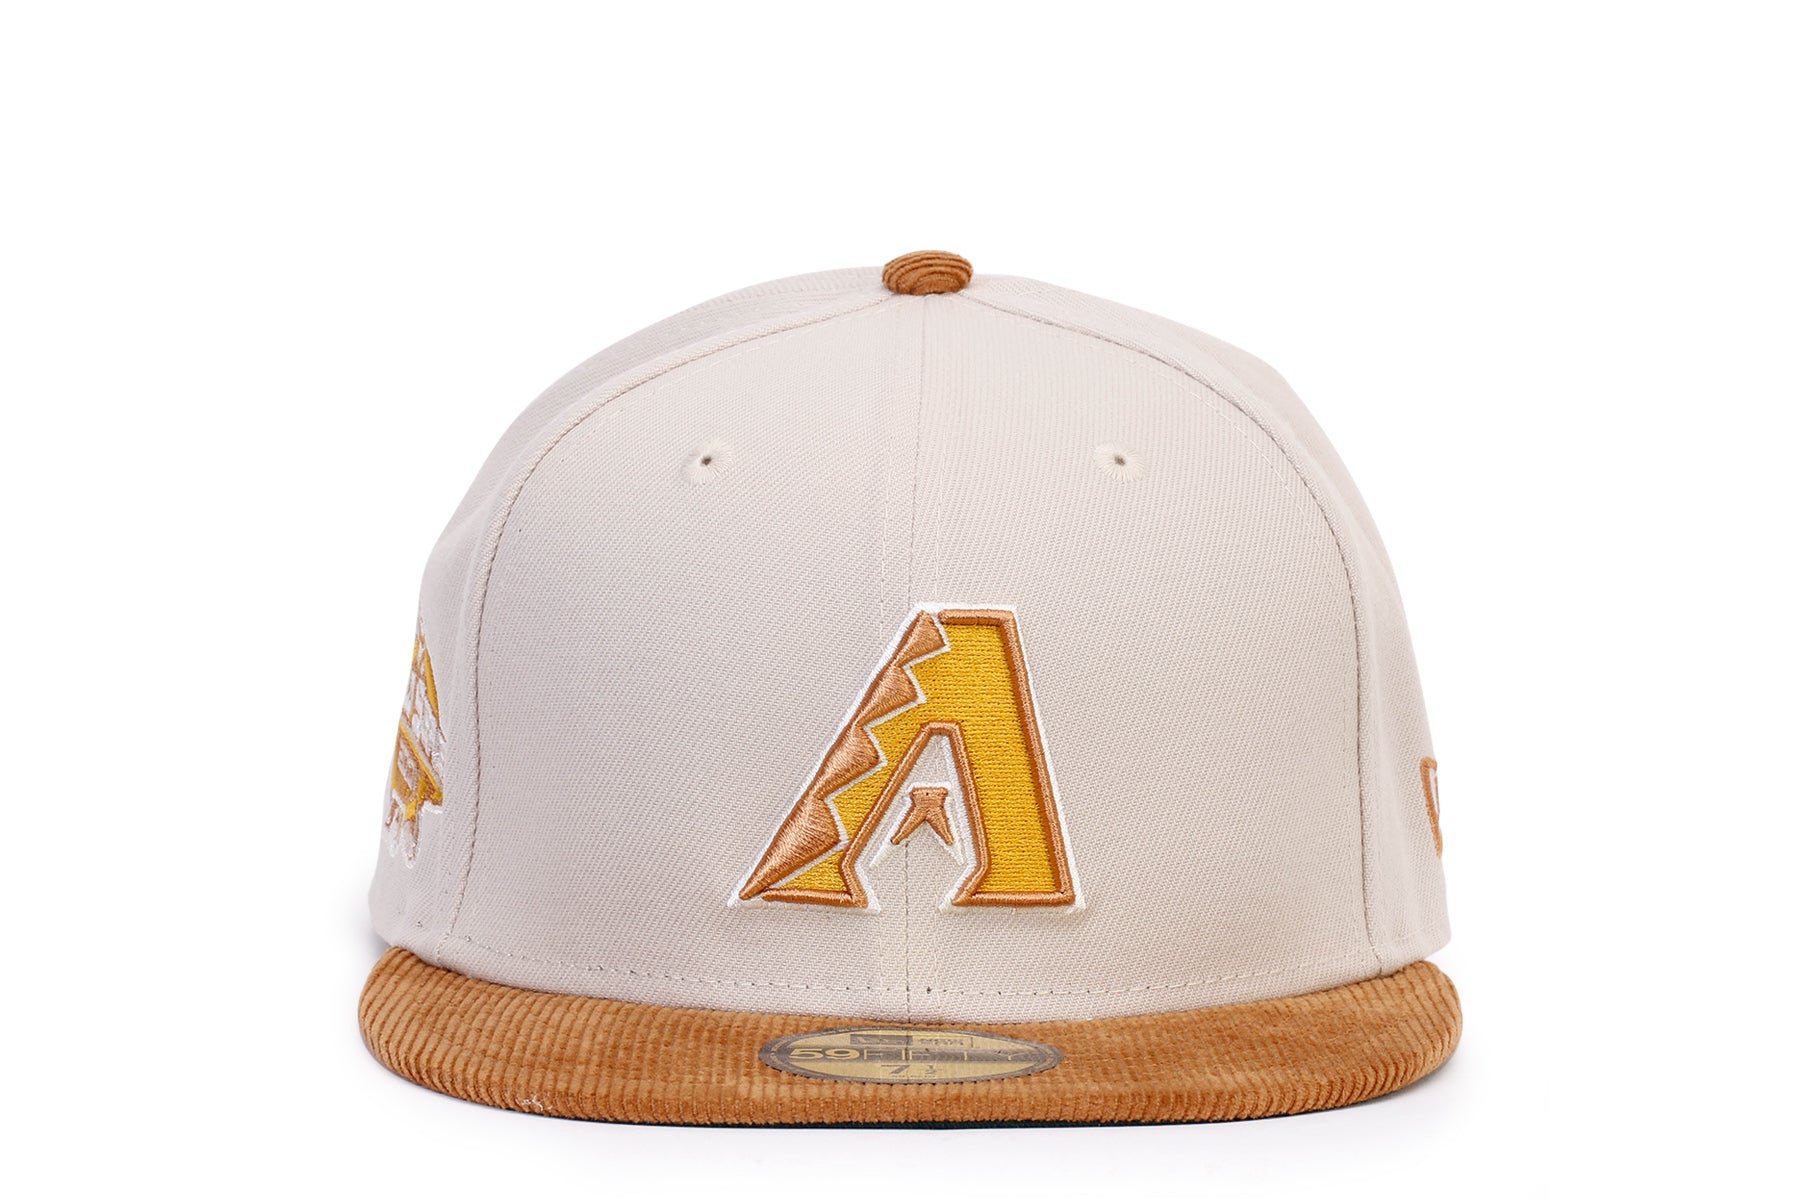 Arizona Diamondbacks Cooperstown Corduroy 59FIFTY Fitted Hat, White - Size: 8, MLB by New Era